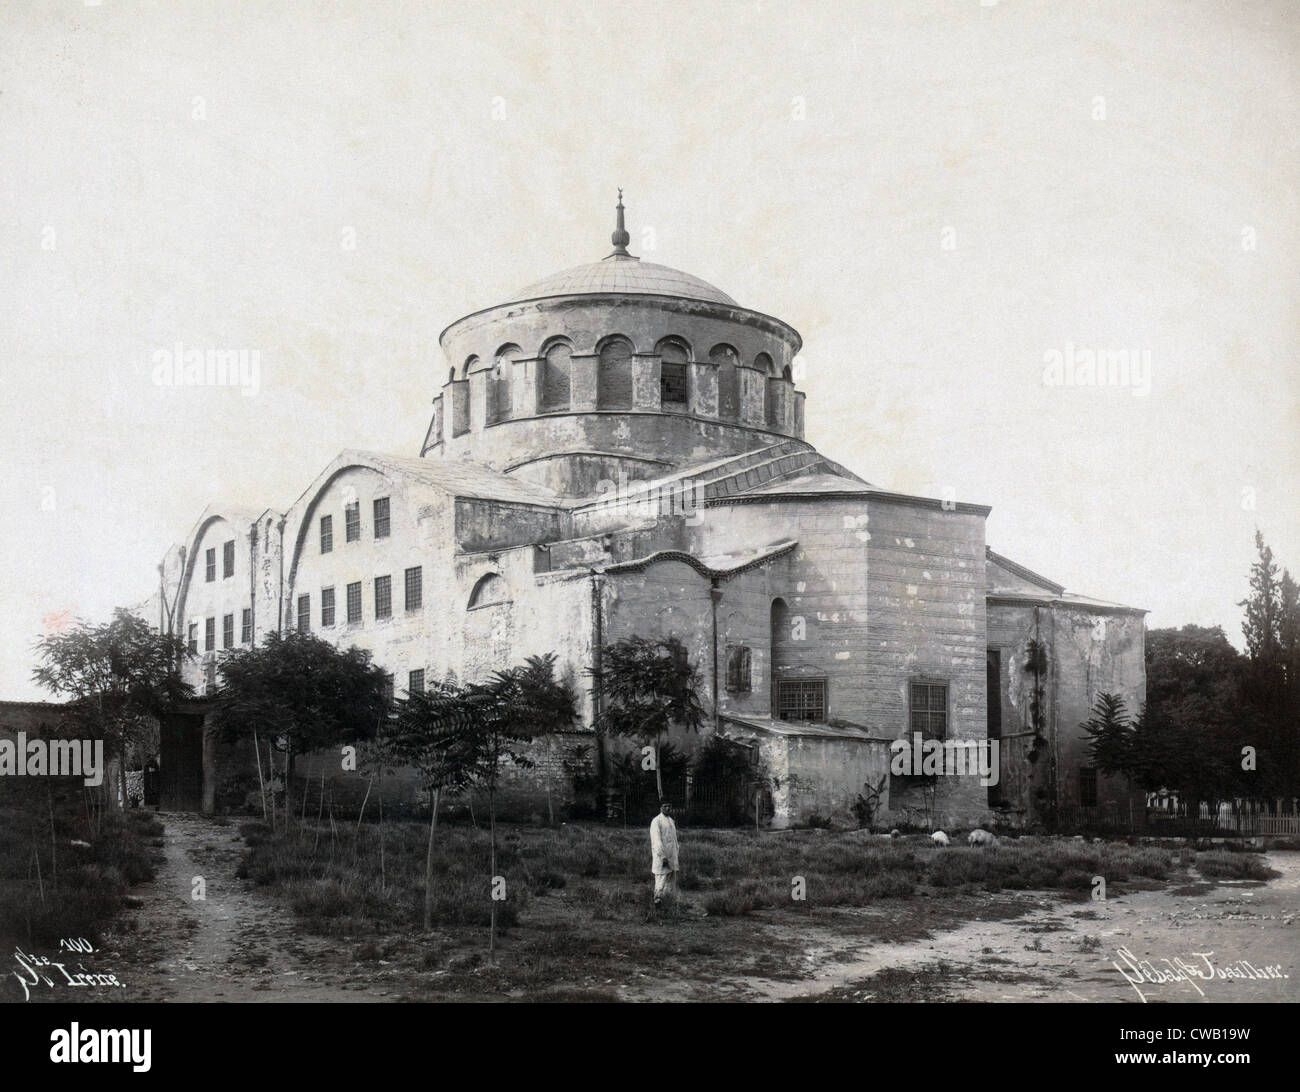 Exterior of the 4th century Hagia Irene, built by the Emperor Constantine, Istanbul, Turkey. Albumen print ca 1900. Stock Photo